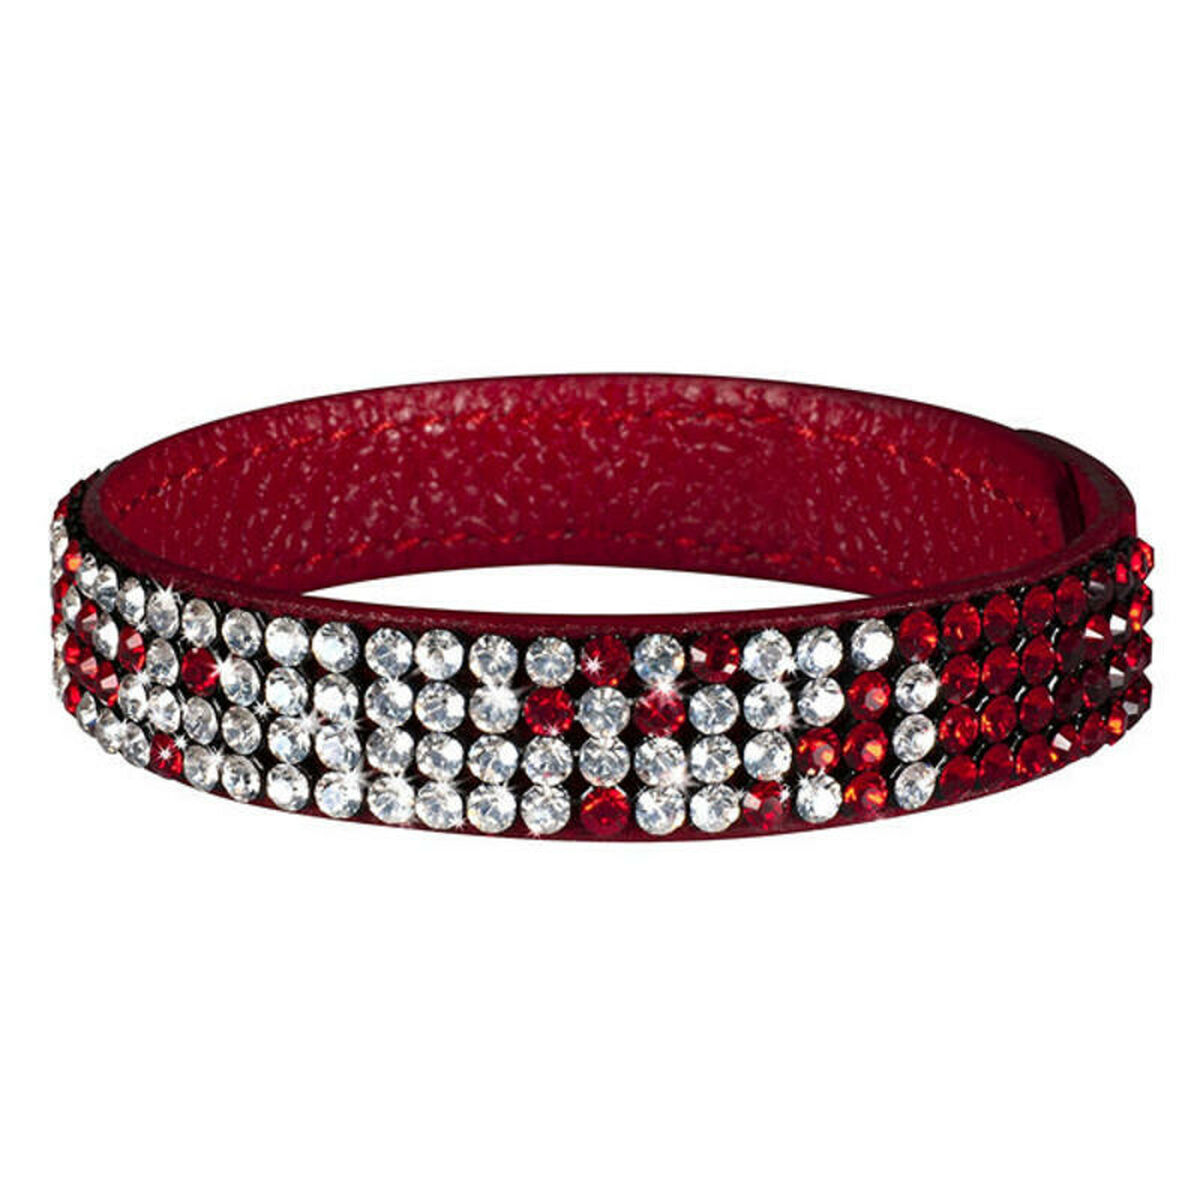 Bracelet Femme Glamour GBR1-055 (21 cm) Rouge Cuir (18 - 19,5 cm)